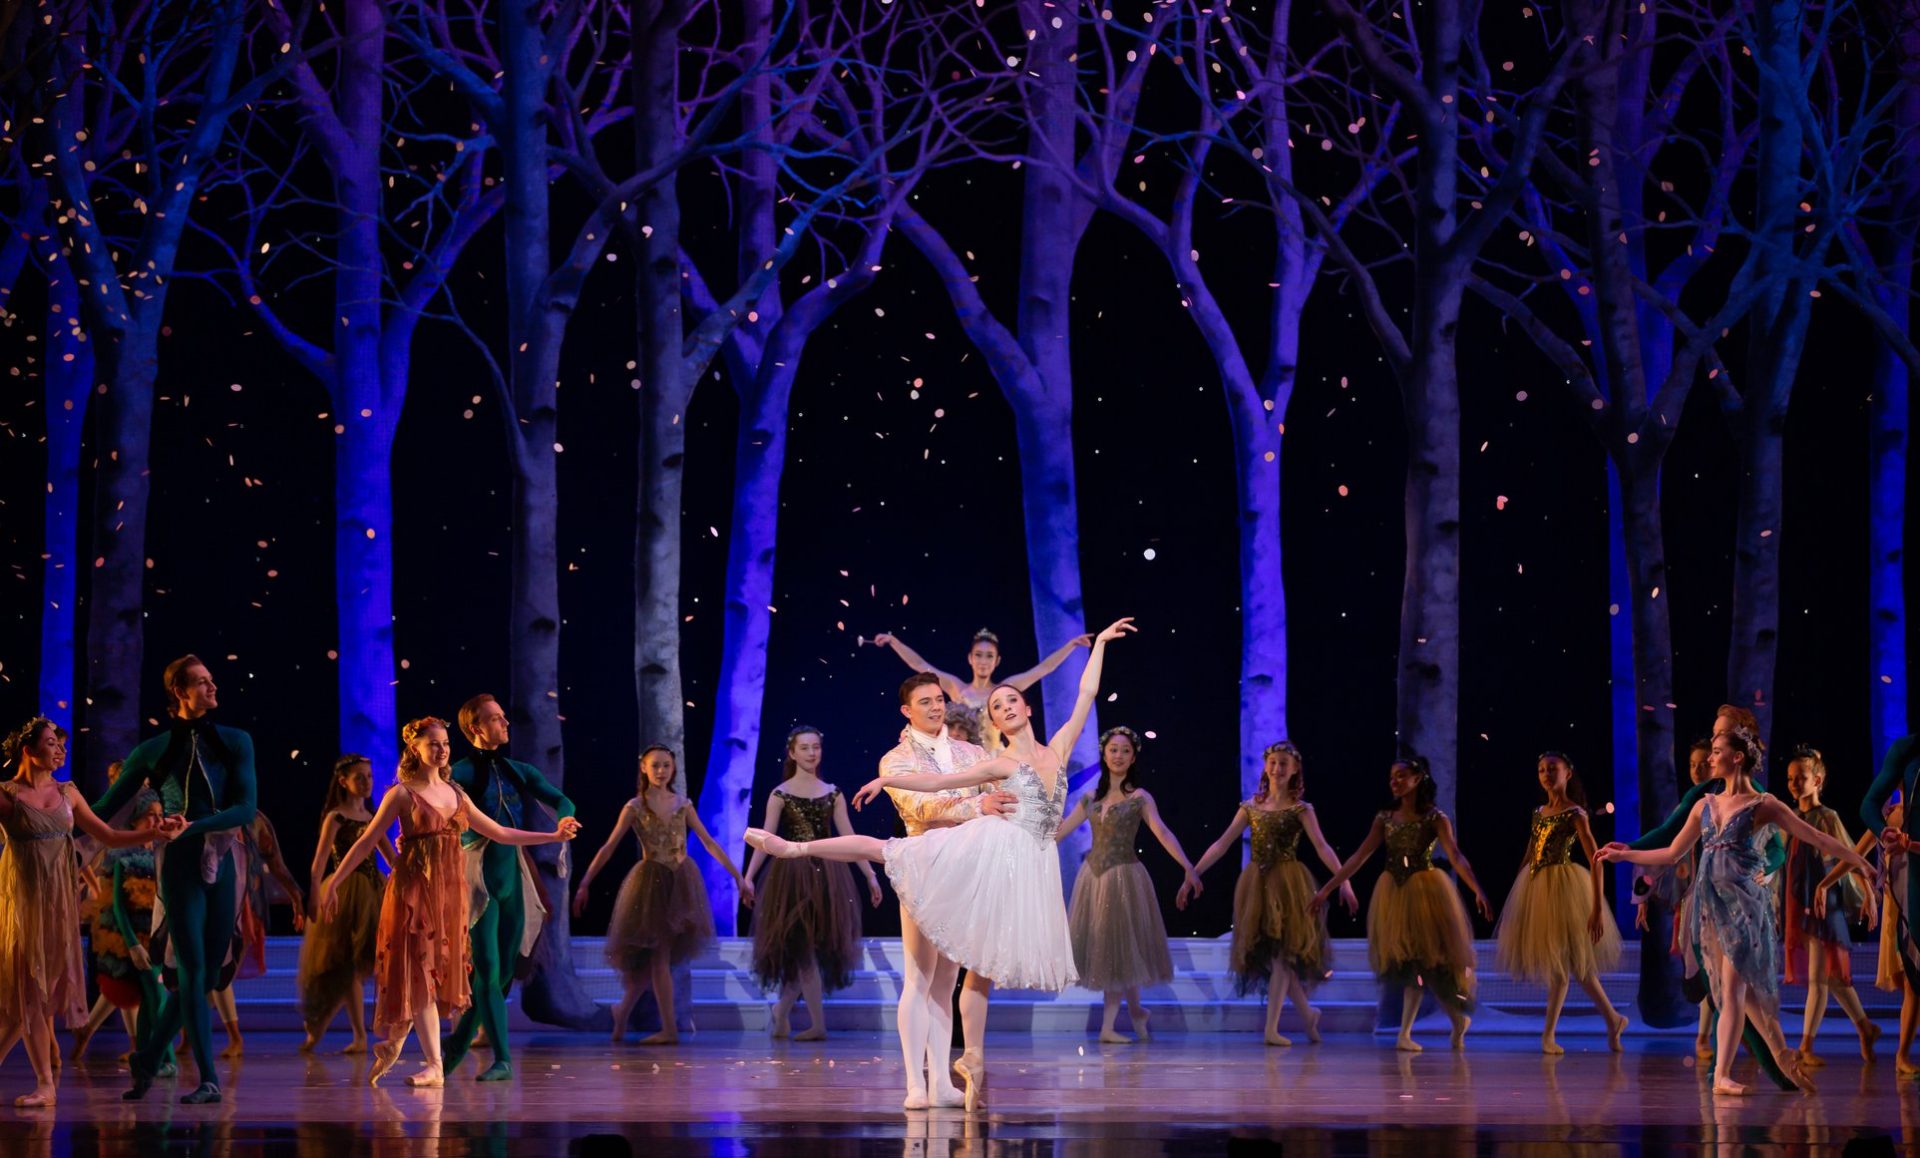 Cinderella is performed on stage